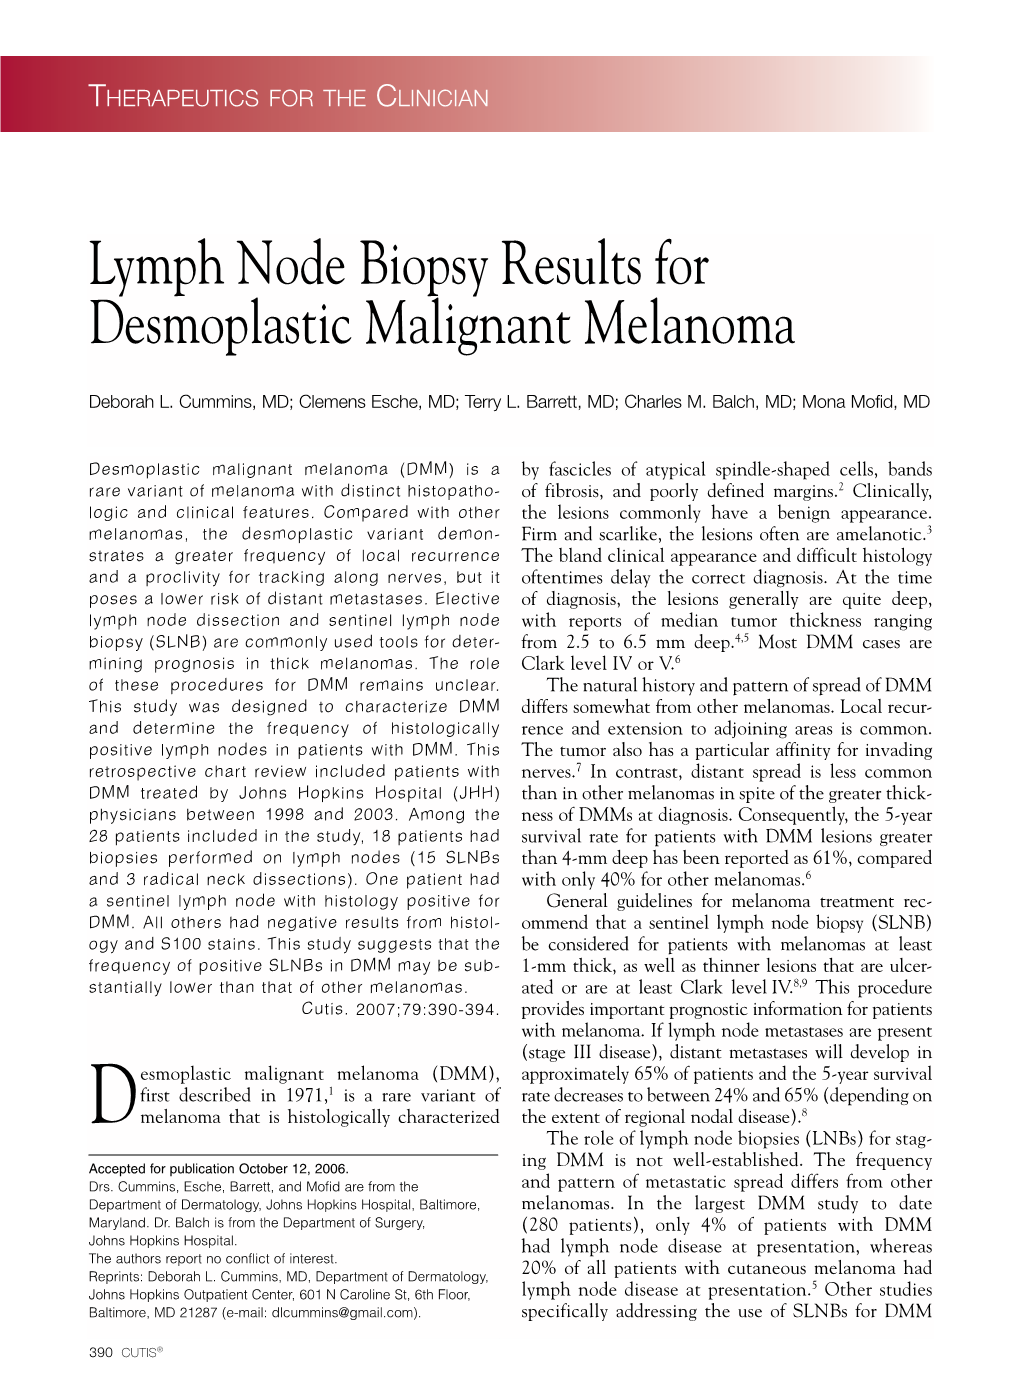 Lymph Node Biopsy Results for Desmoplastic Malignant Melanoma